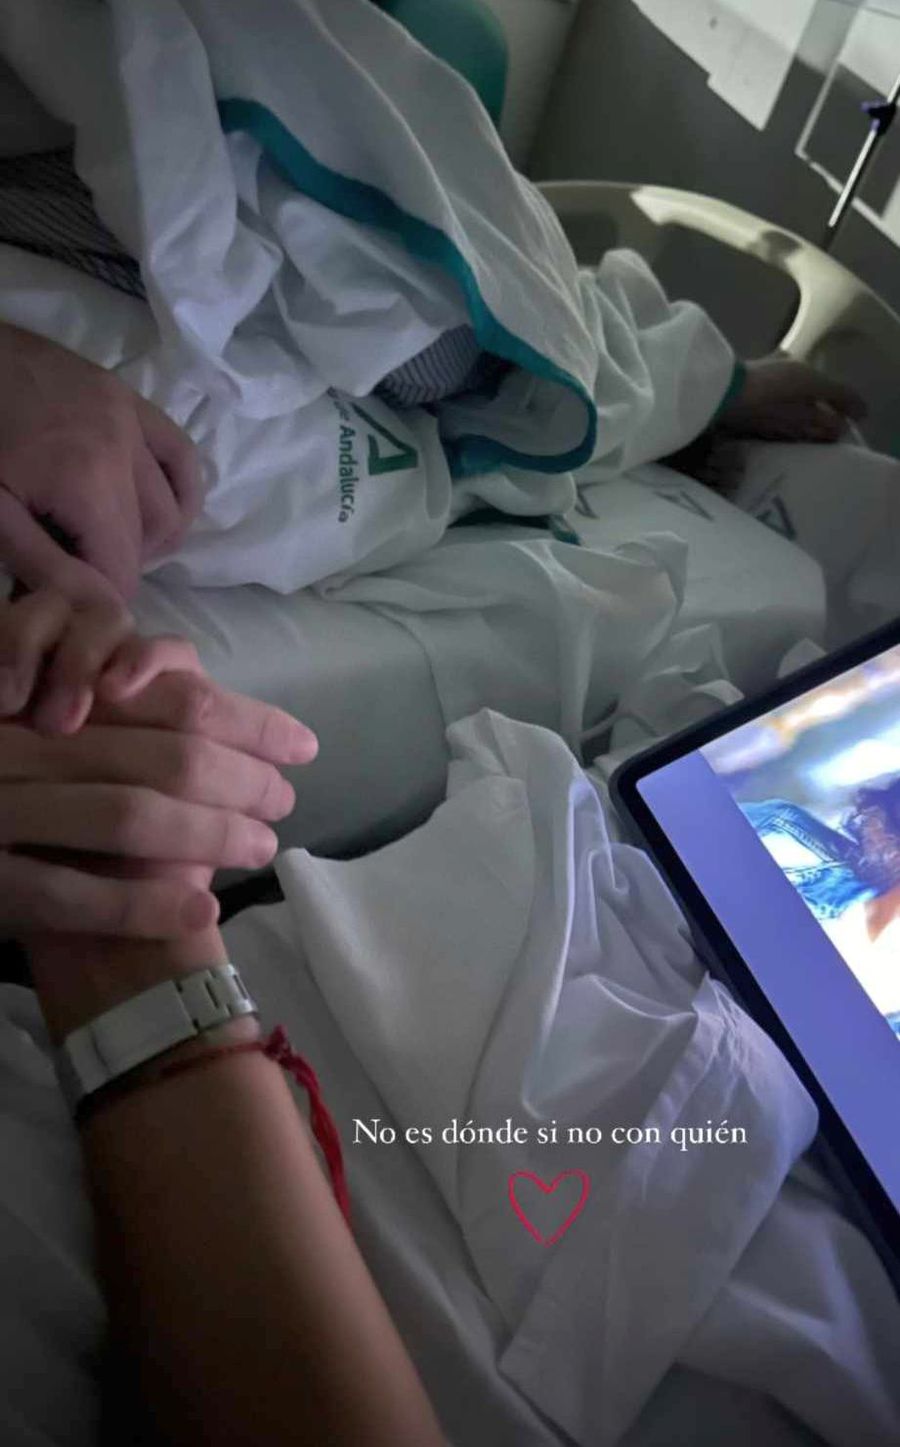 Prima poză cu Sergio Rico din spital »  Mesaj emoționant trimis colegilor de la PSG